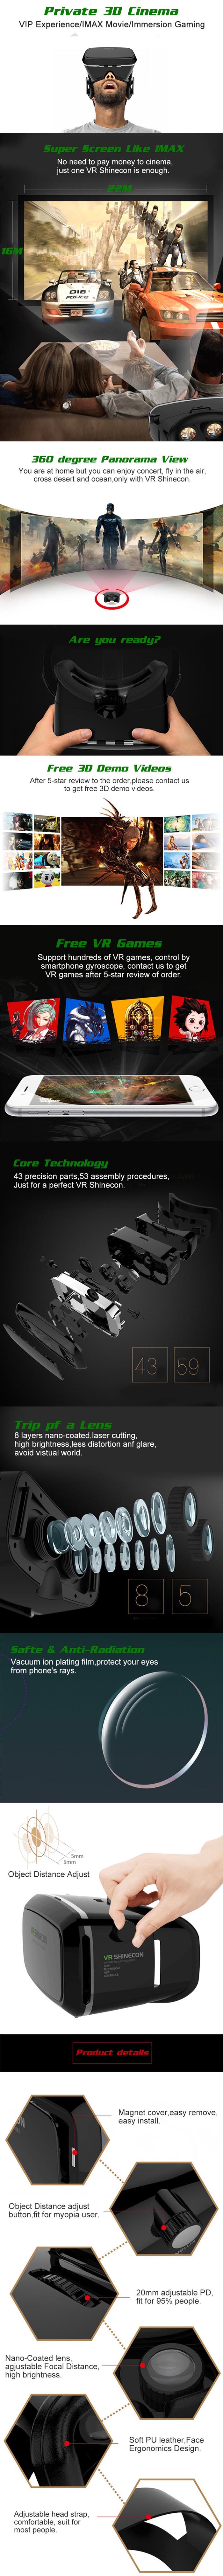 VR Shinecon 3D Virtual Reality Glasses Head Mount